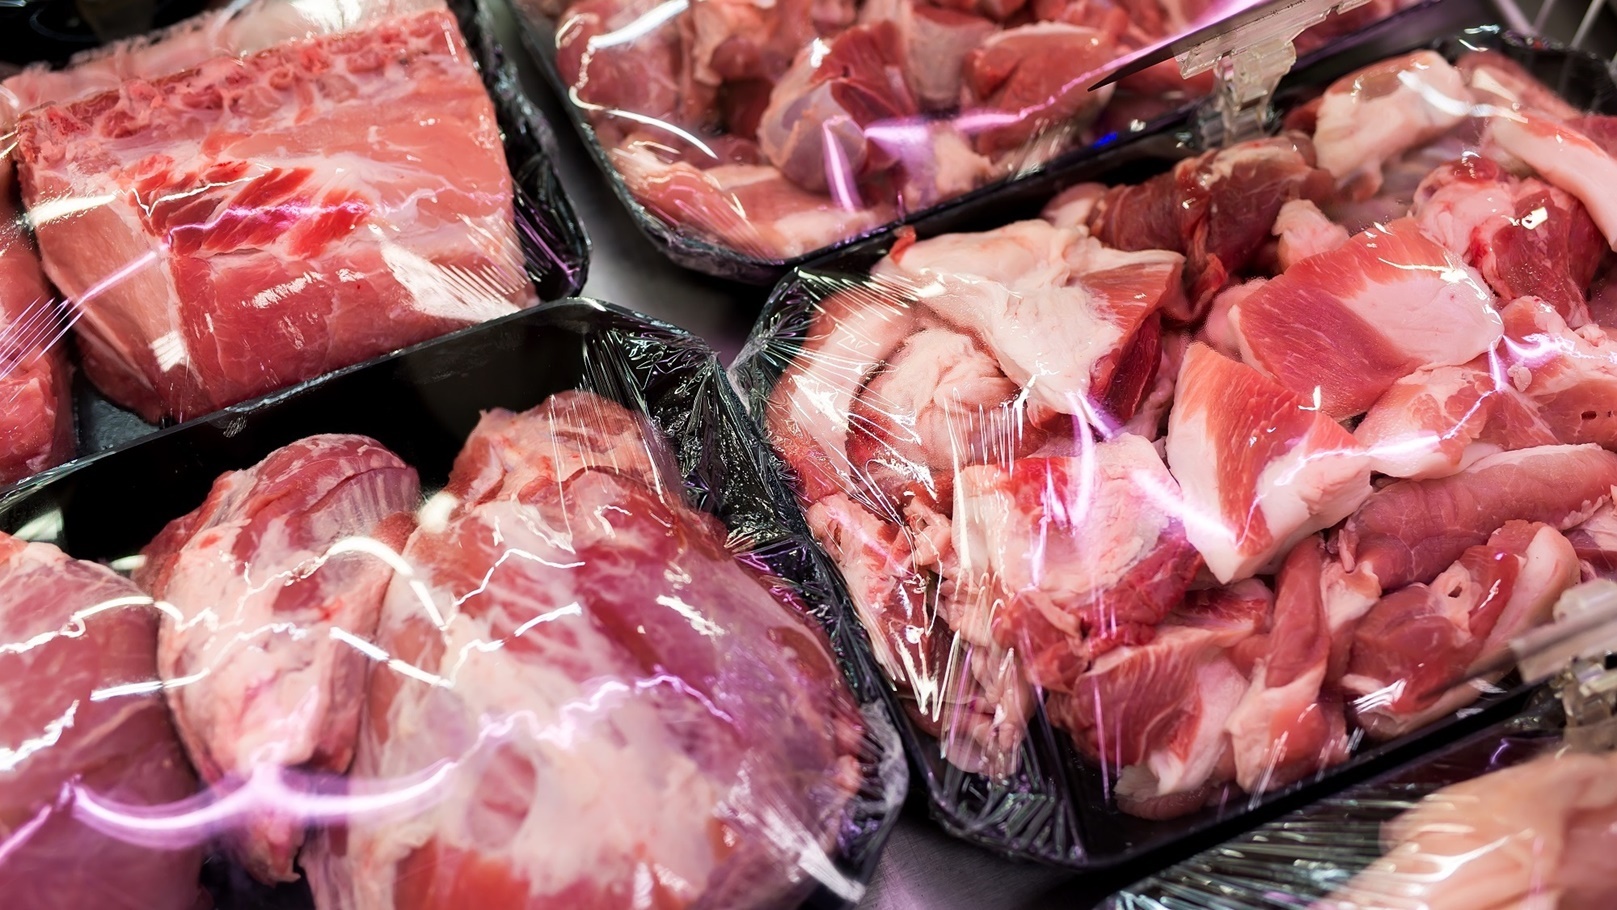 raw-fresh-meat-beef-or-pork-in-supermarket-2022-02-17-20-16-17-utc